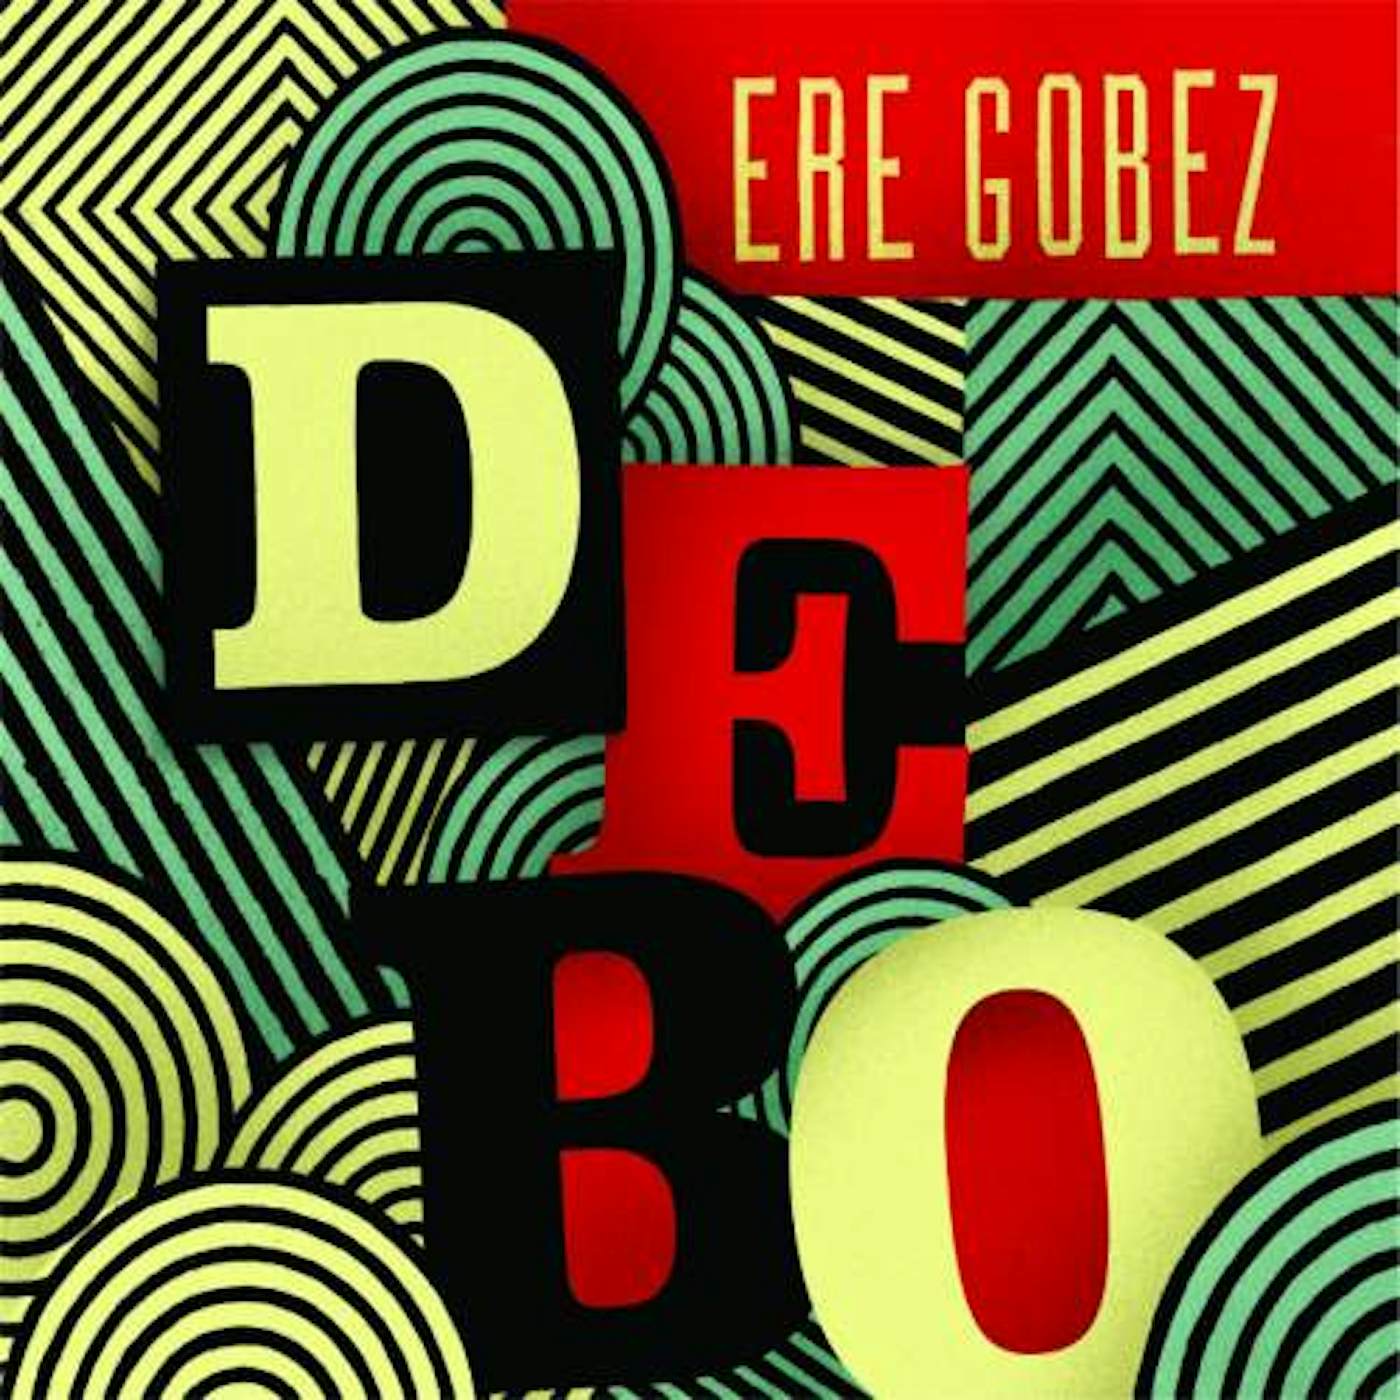 Debo Band Ere Gobez Vinyl Record